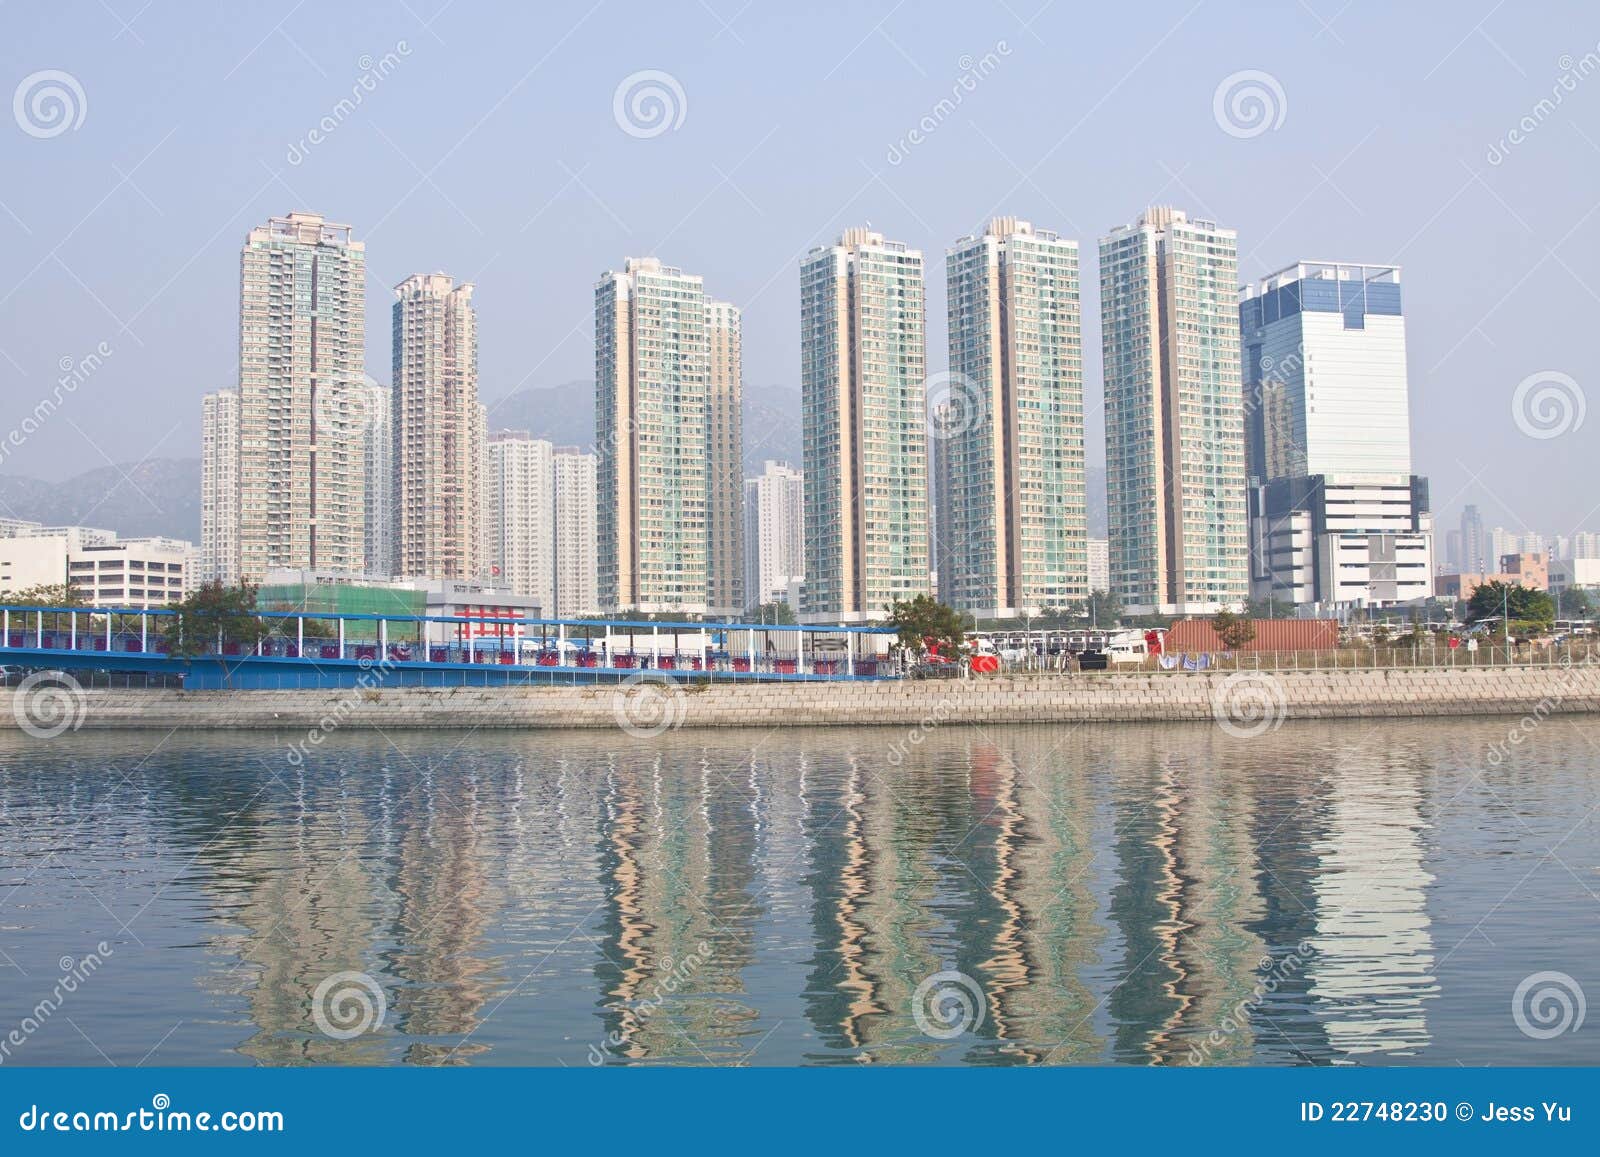 hong-kong-apartment-blocks-downtown-area-22748230.jpg